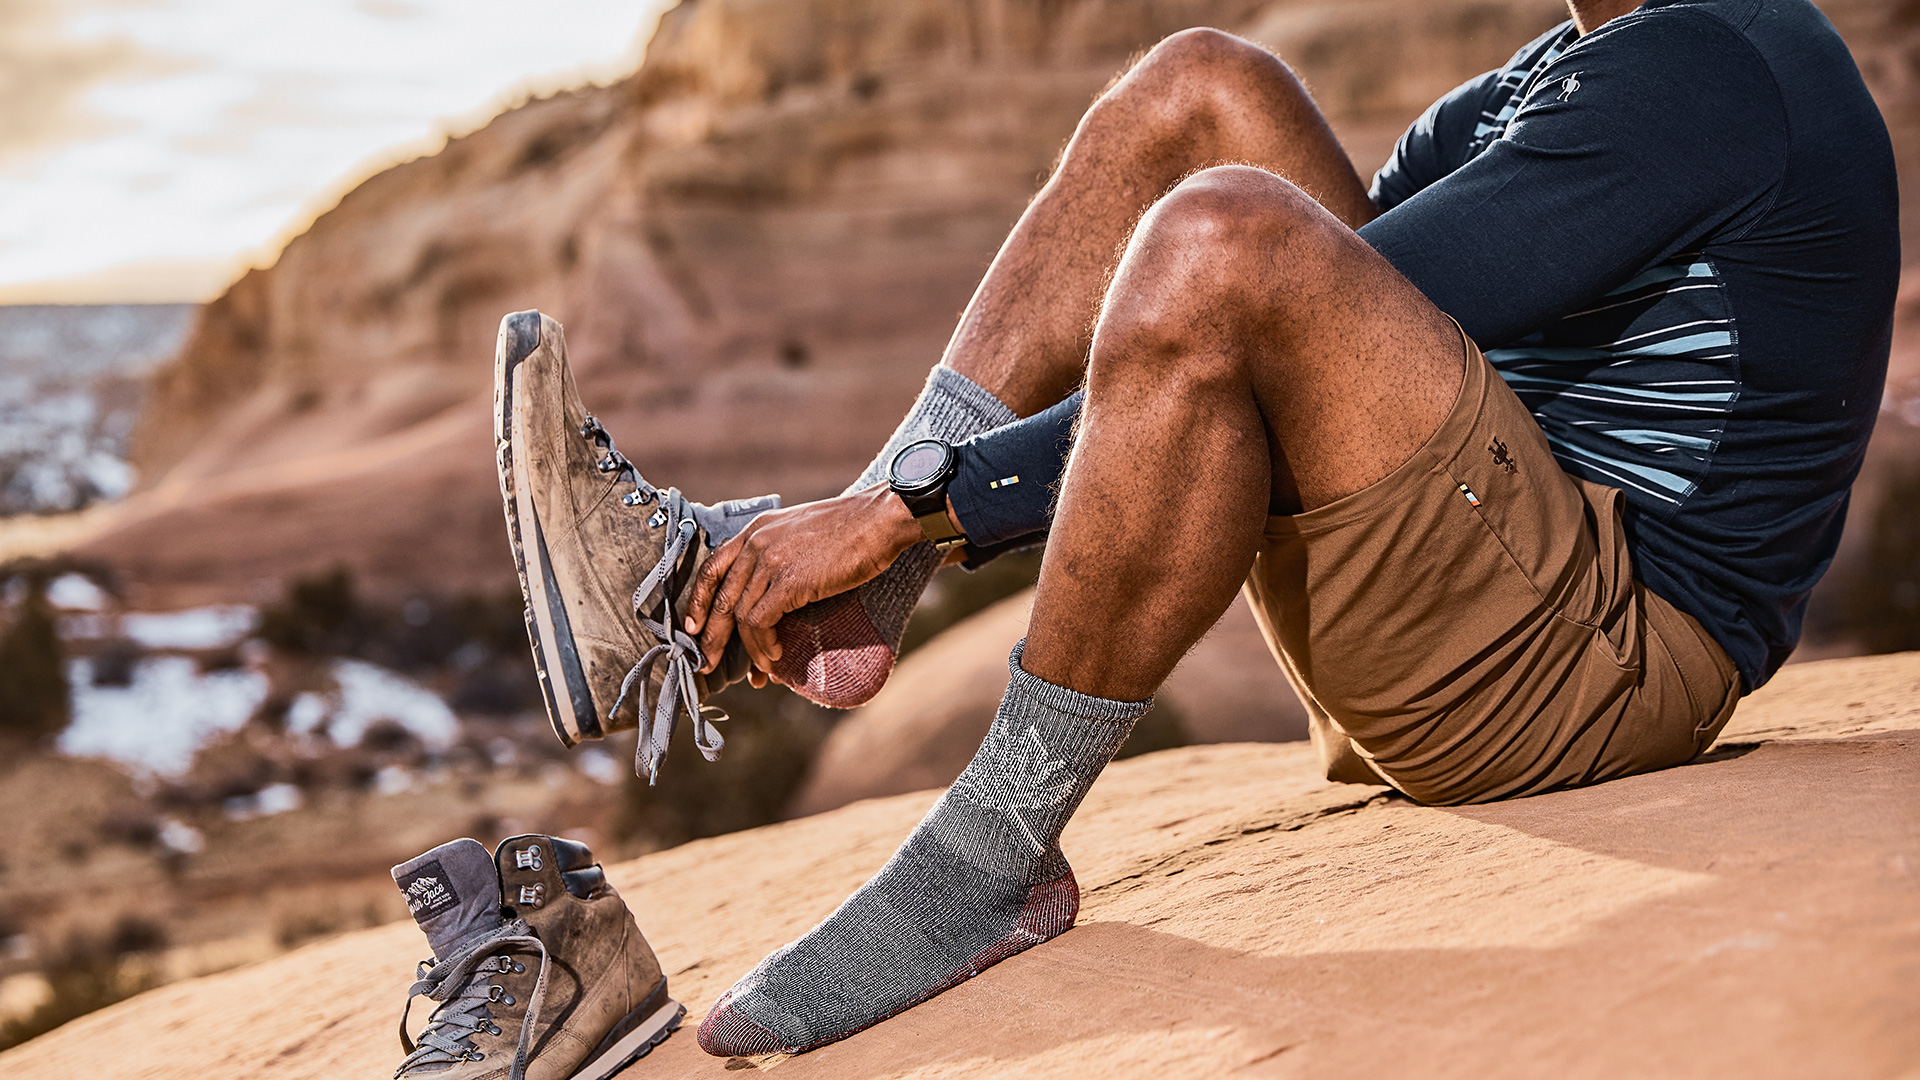 ONKE Men's Merino Wool Moisture Wicking Control Breathable Performance Outdoor Trail Hiker Hiking Cushion Crew Socks 